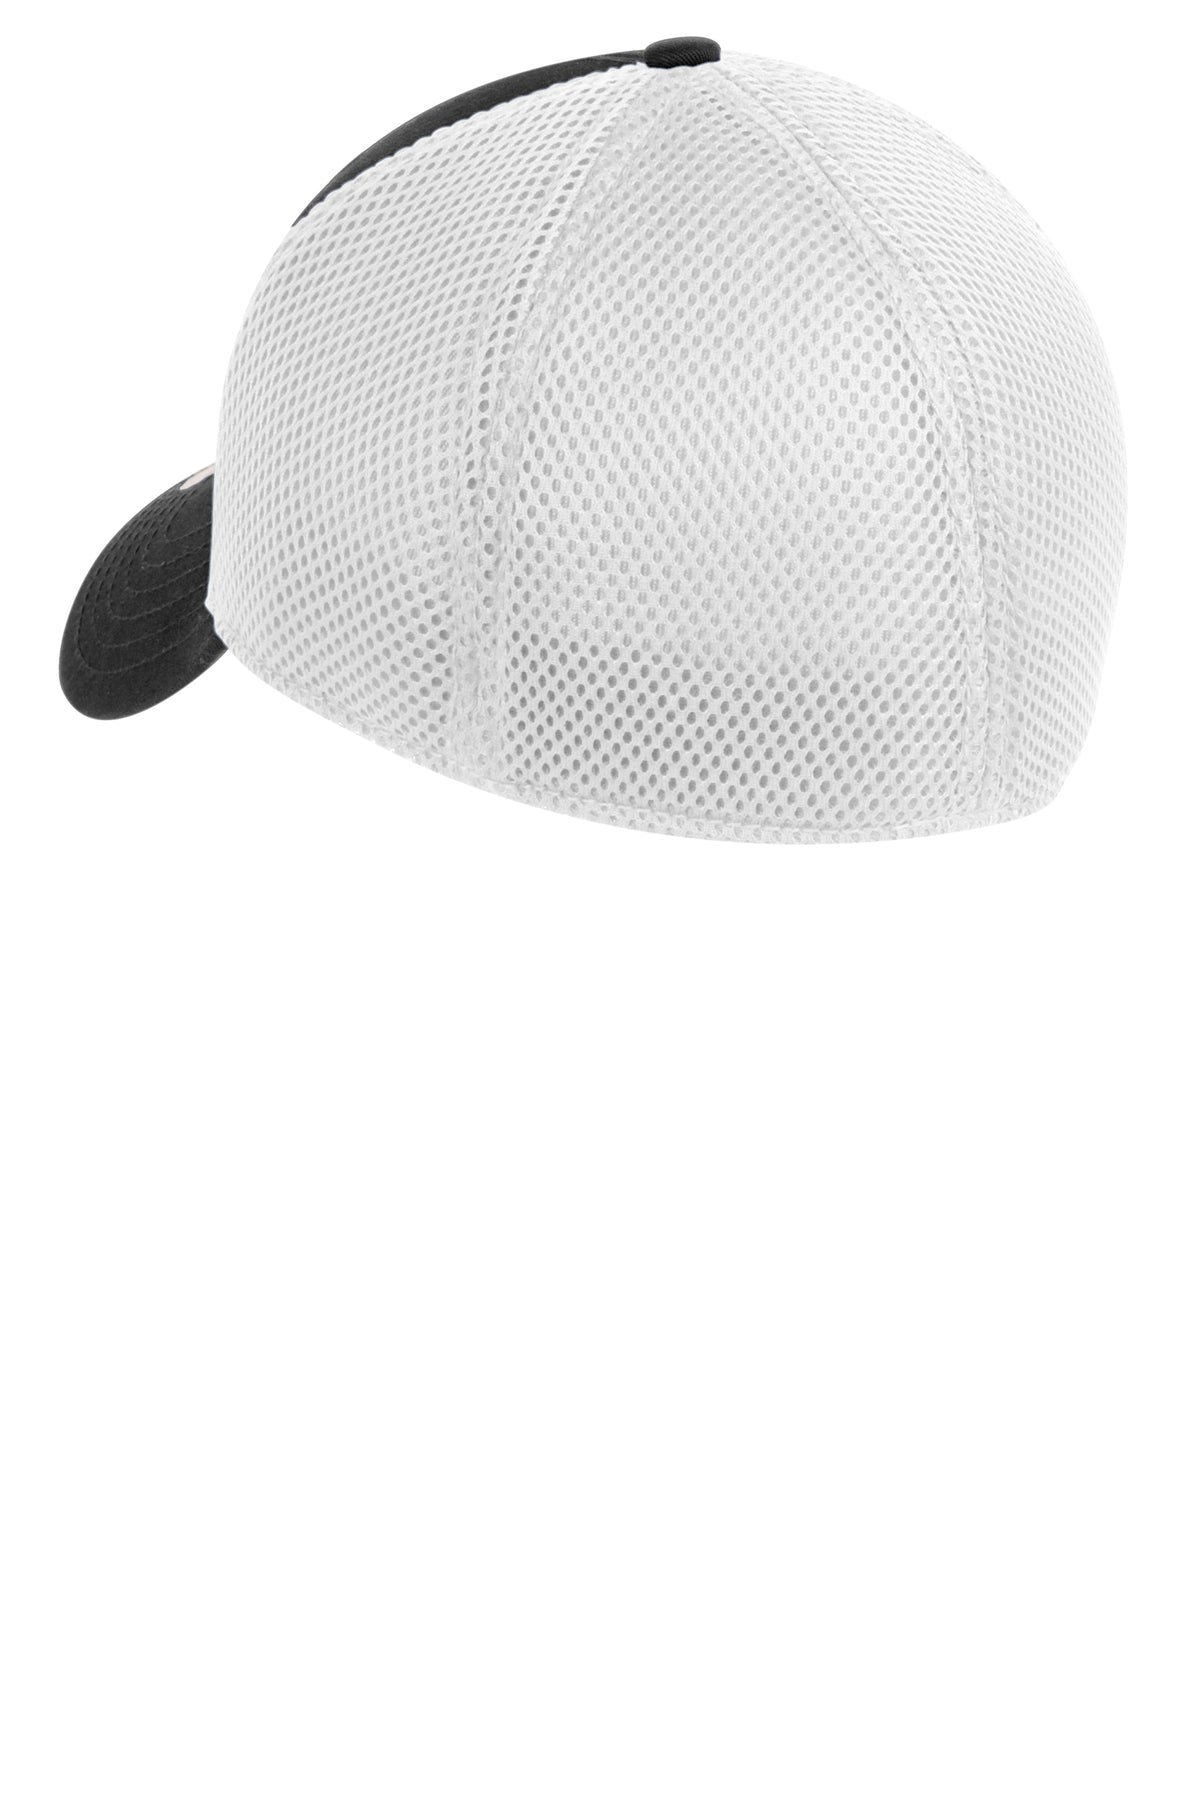 New Era Stretch Mesh Customized Caps, Black/White